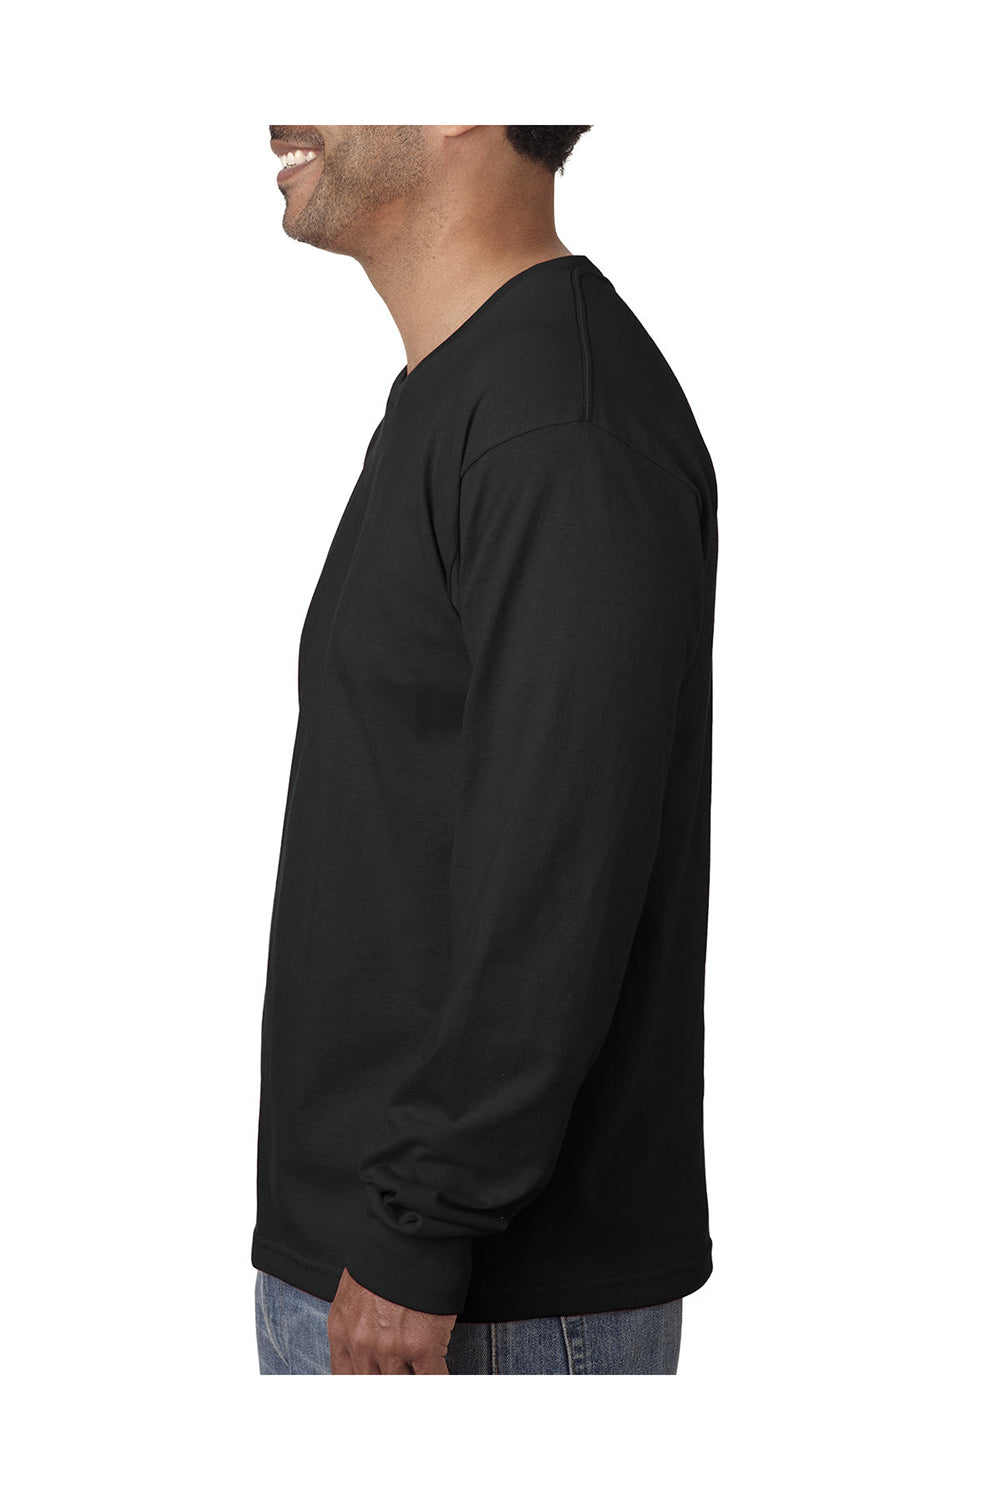 Bayside BA5060 Mens USA Made Long Sleeve Crewneck T-Shirt Black Model Side